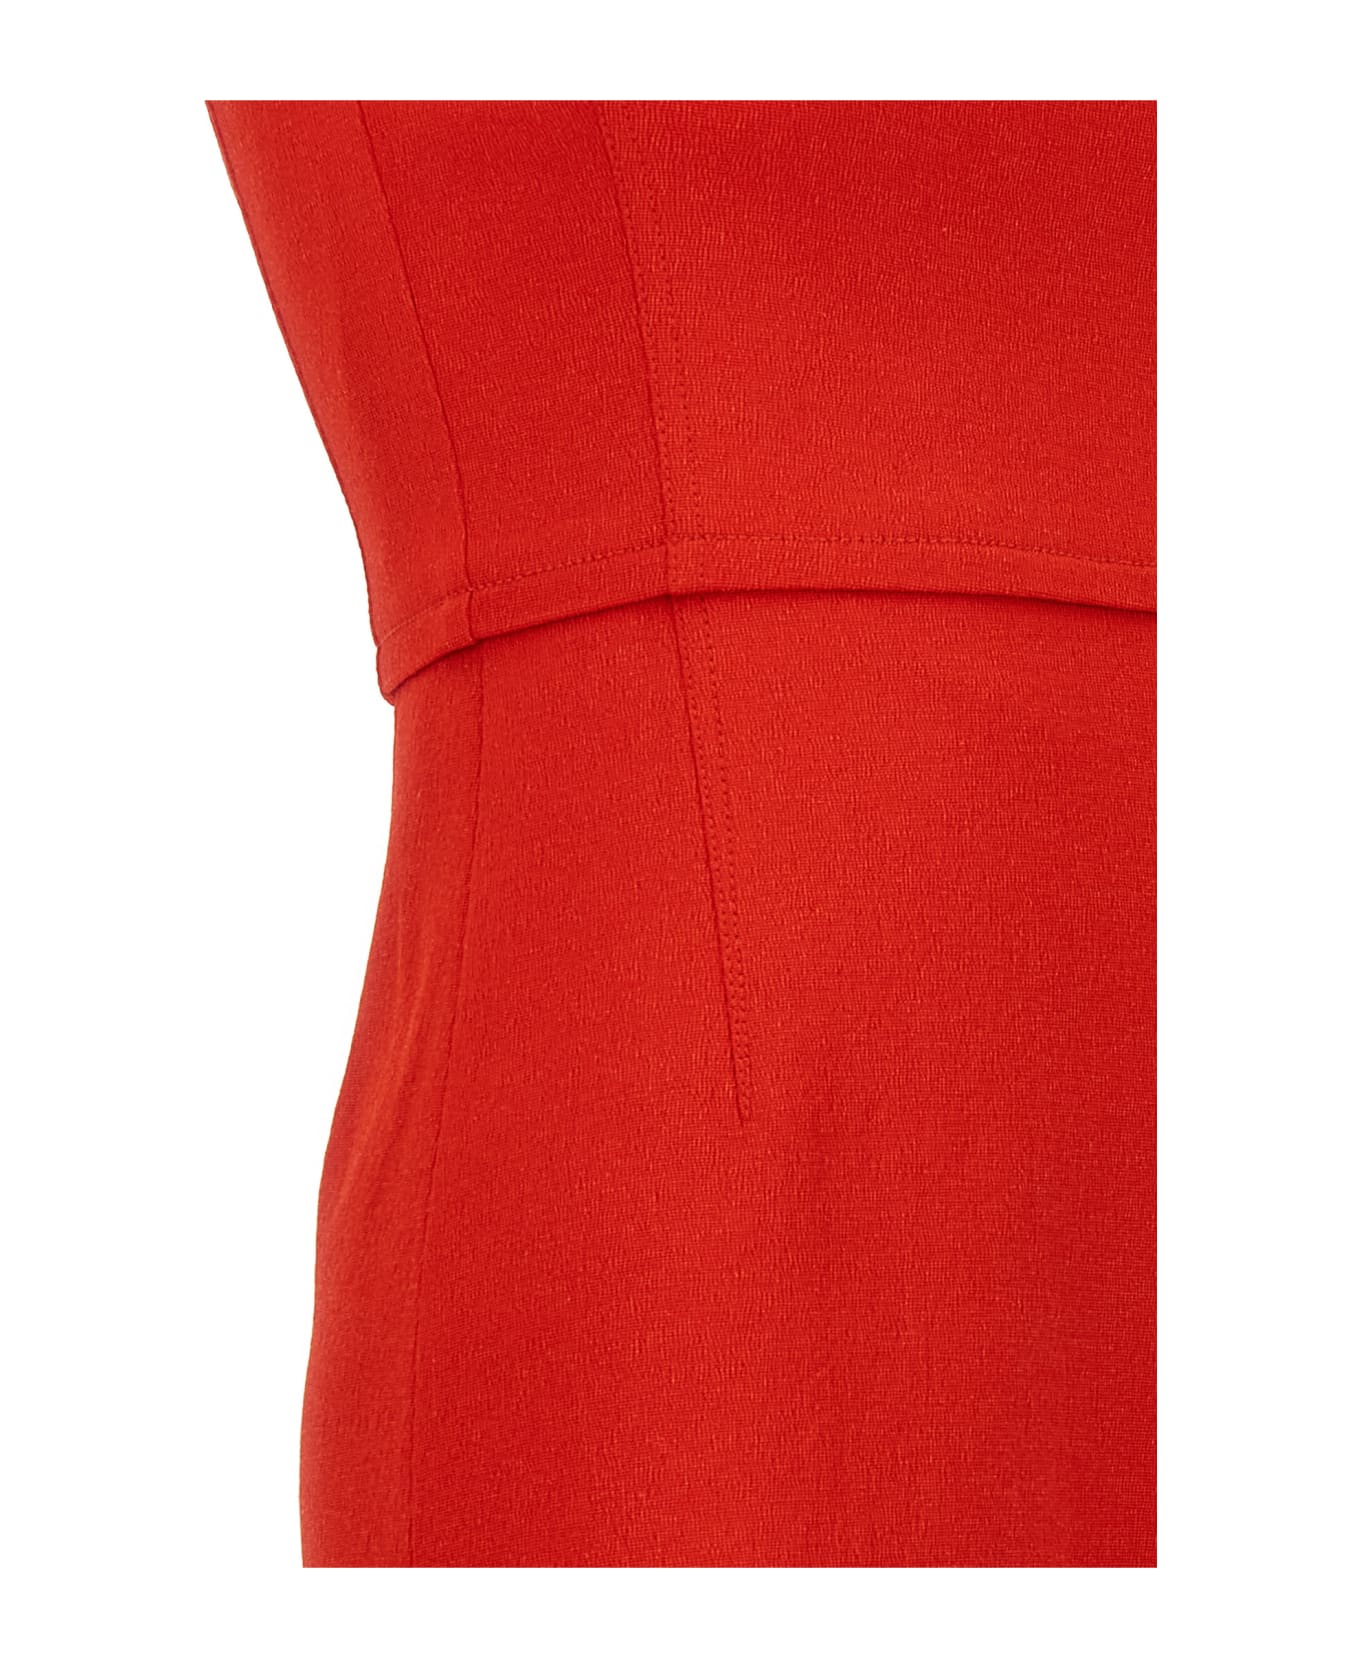 Tory Burch Faille Stretch Dress - Red